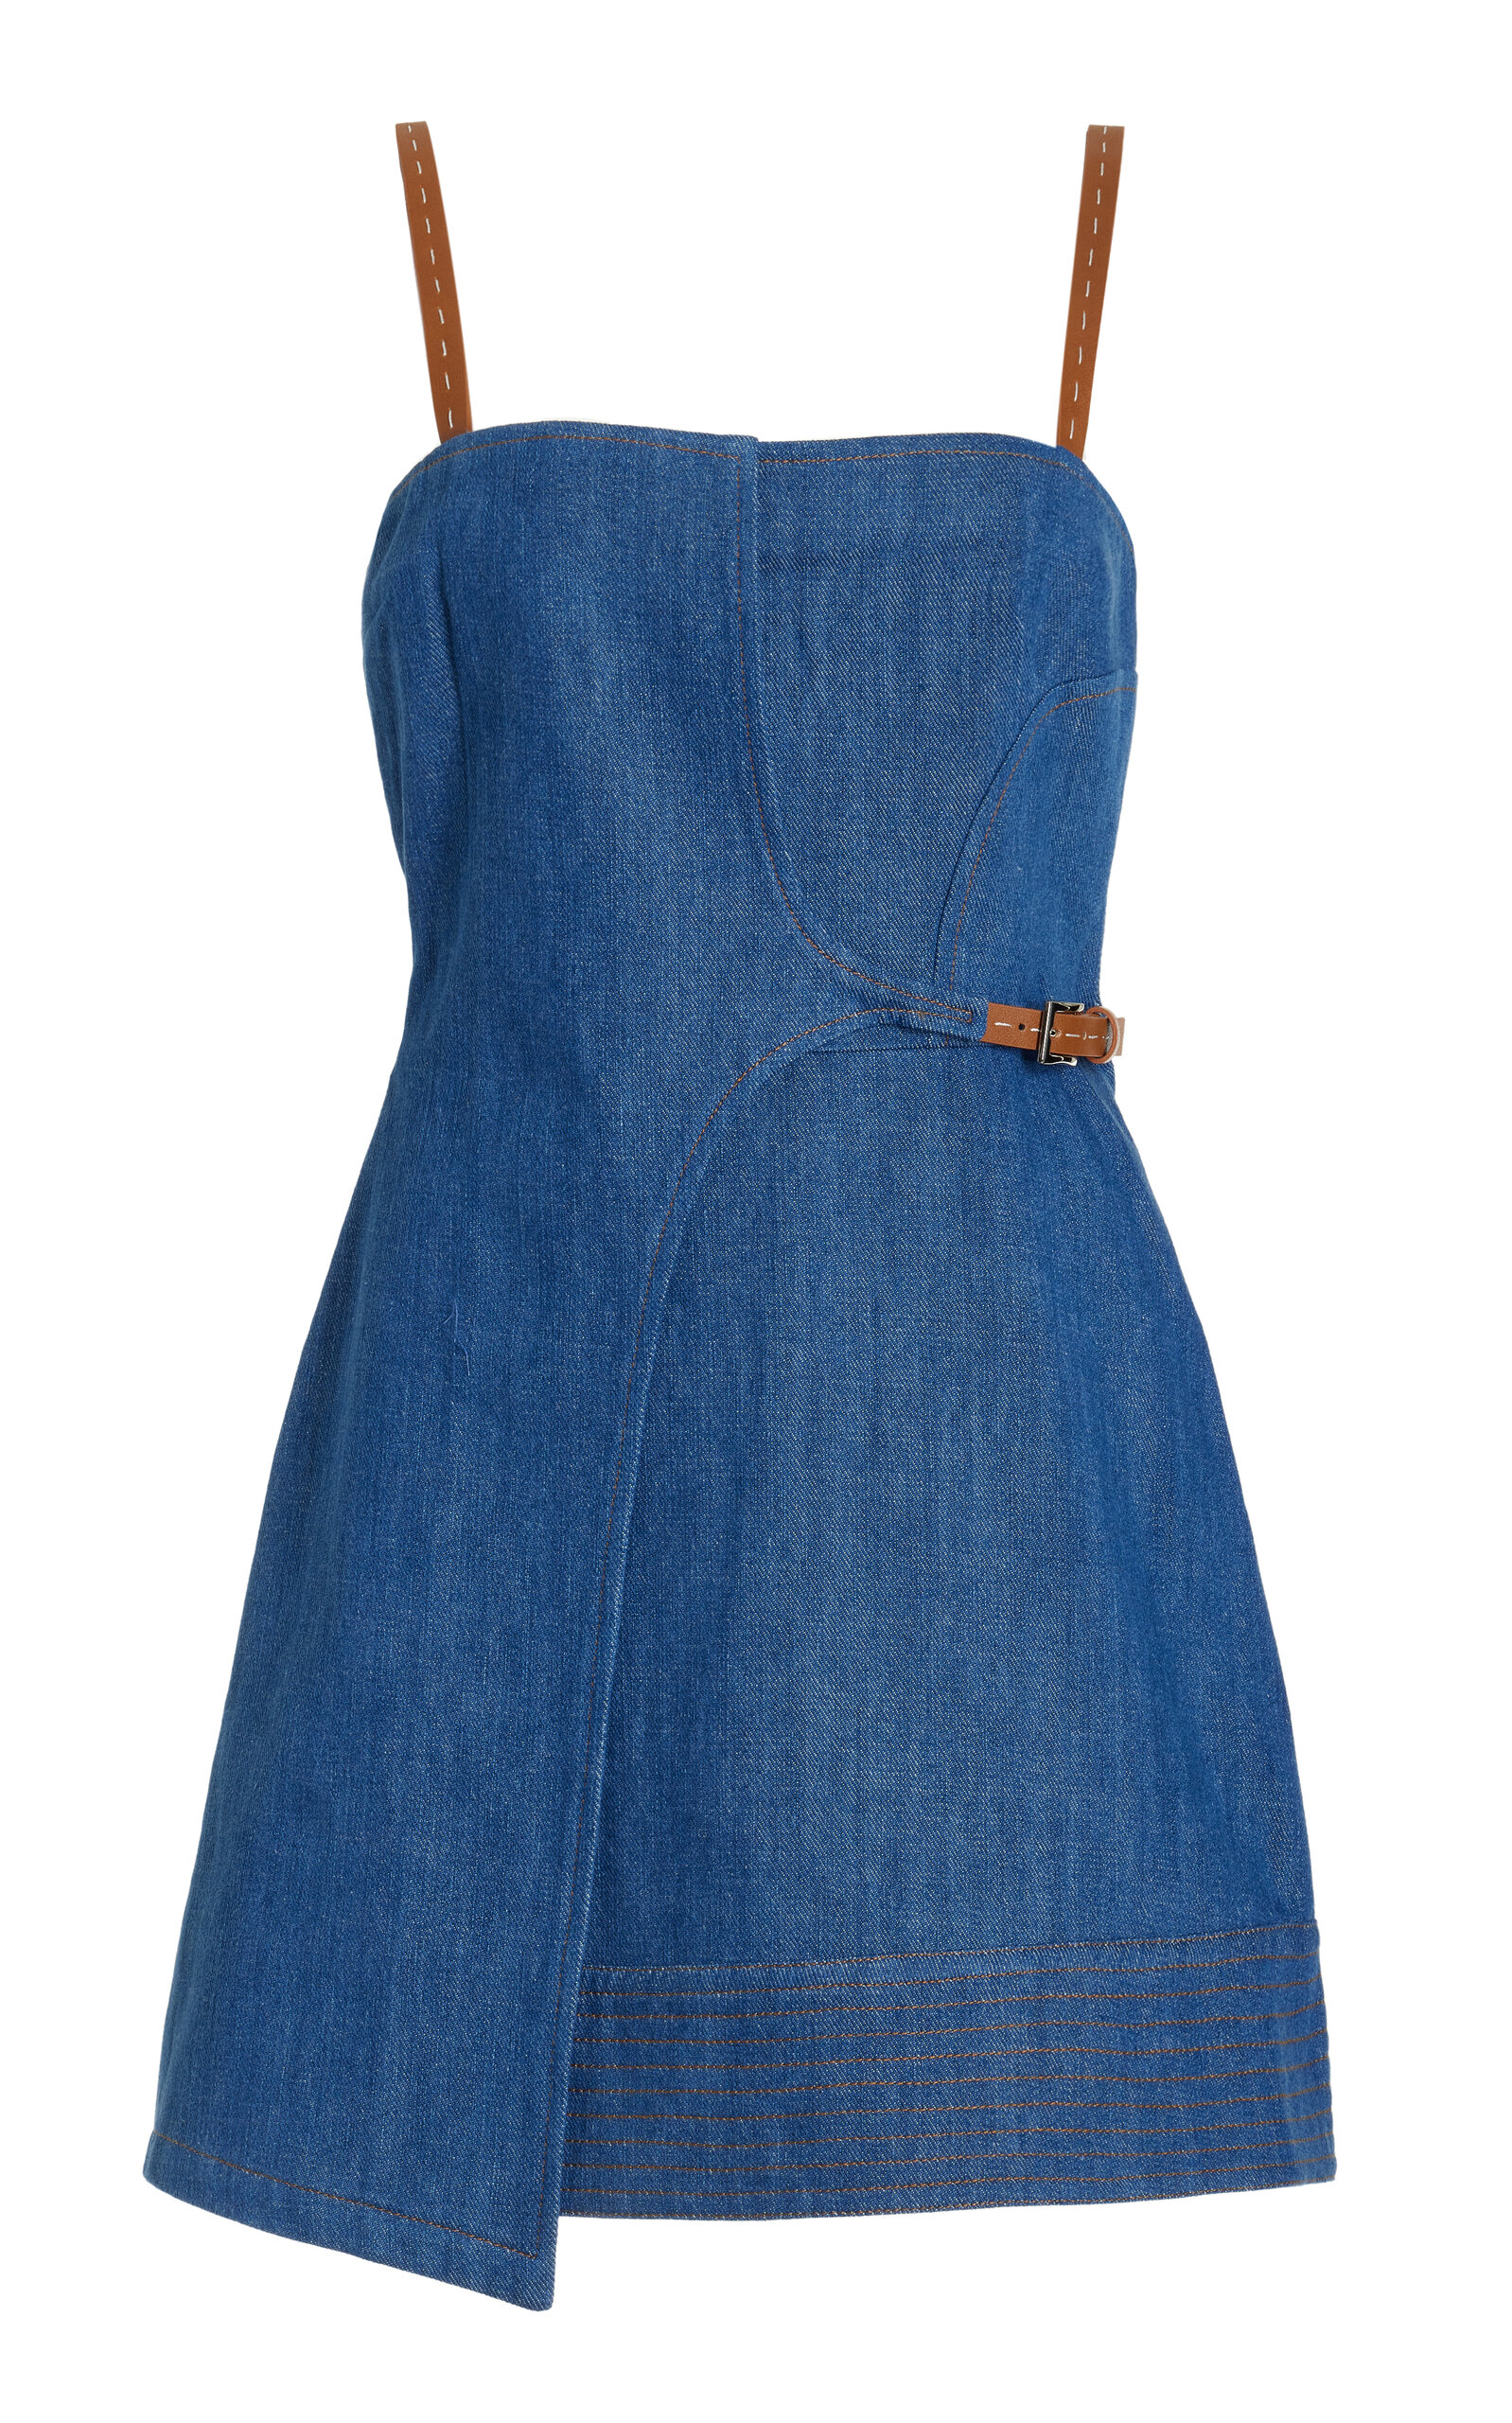 Alexis Ferre Wrapped Denim Mini Dress In Blue